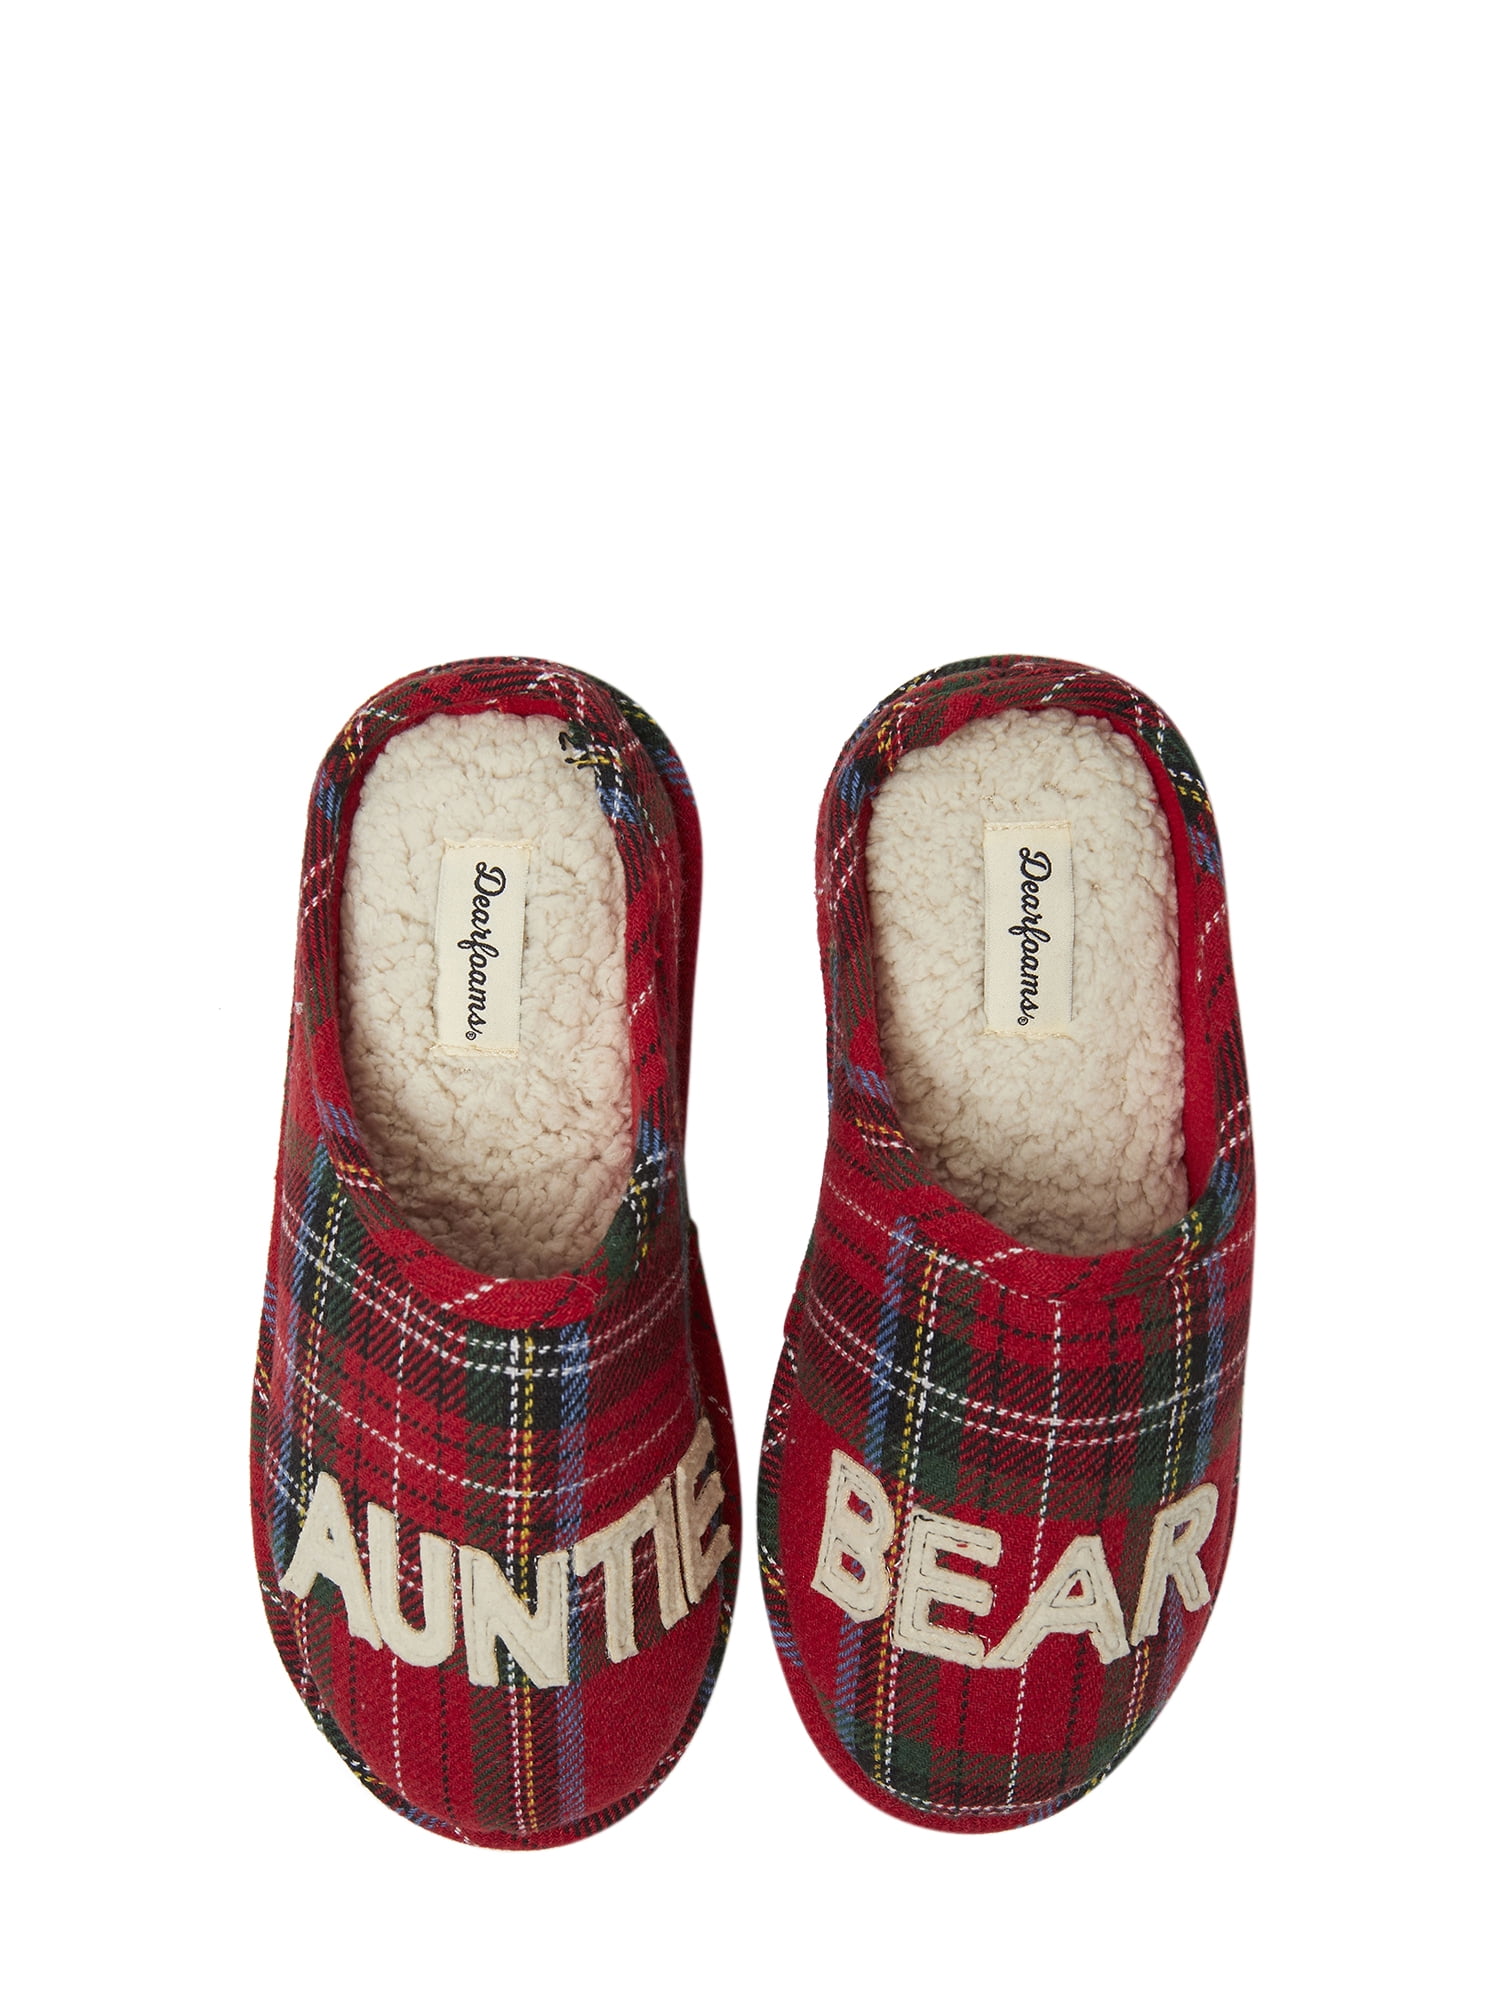 auntie bear slippers